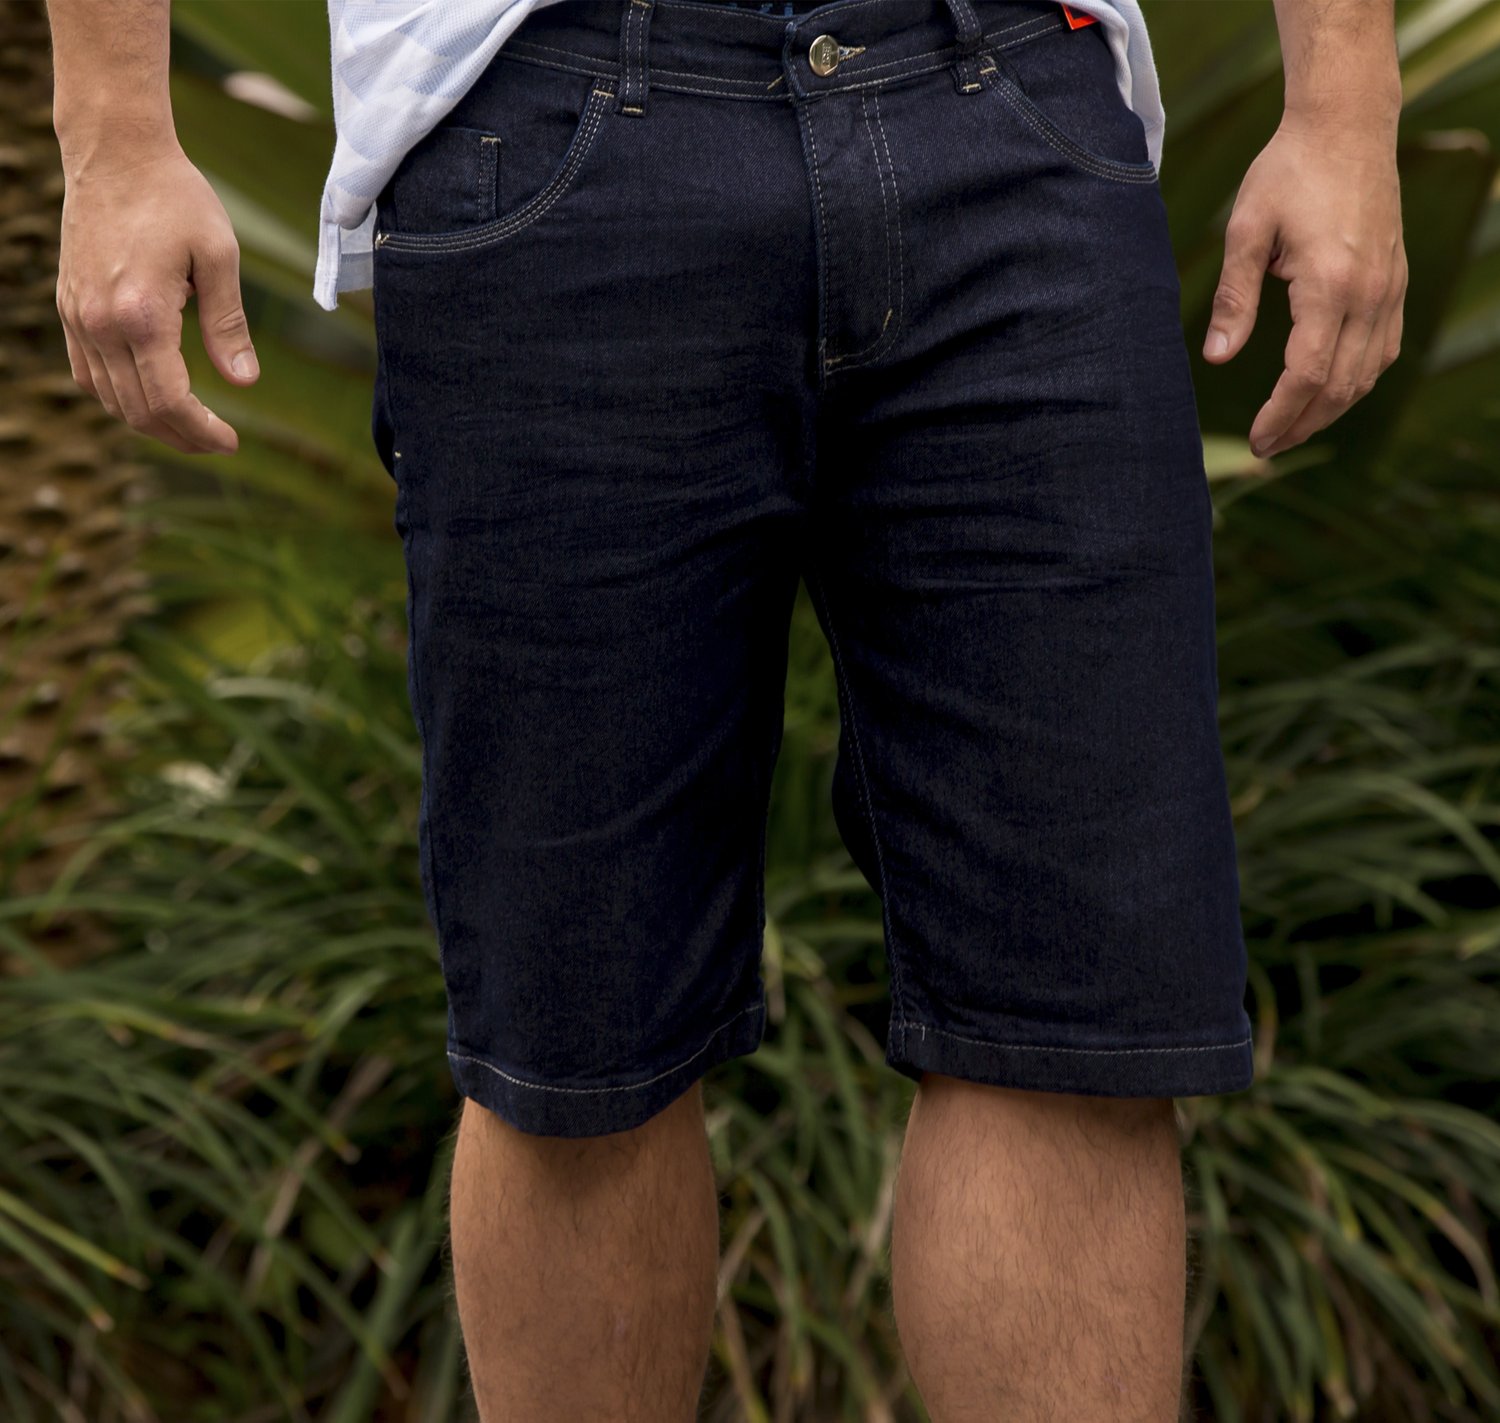 https://static.ferju.com.br/public/ferju/imagens/produtos/bermuda-jeans-masculina-adulto-com-lycra-5243-ice-jeans-escuro-9617.jpg